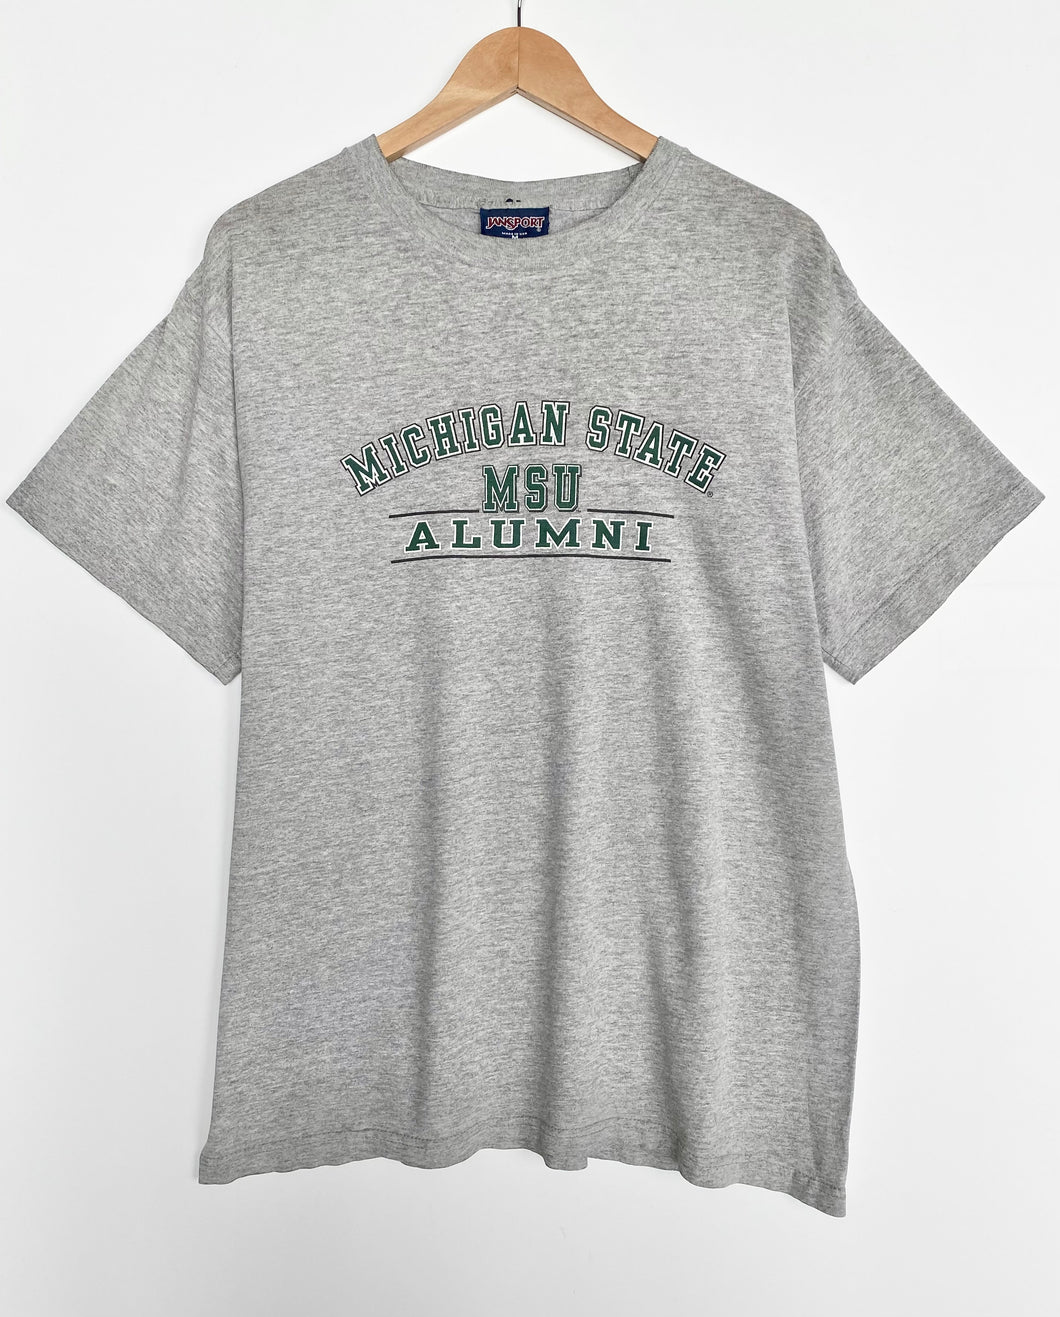 Jansport Michigan College t-shirt (M)